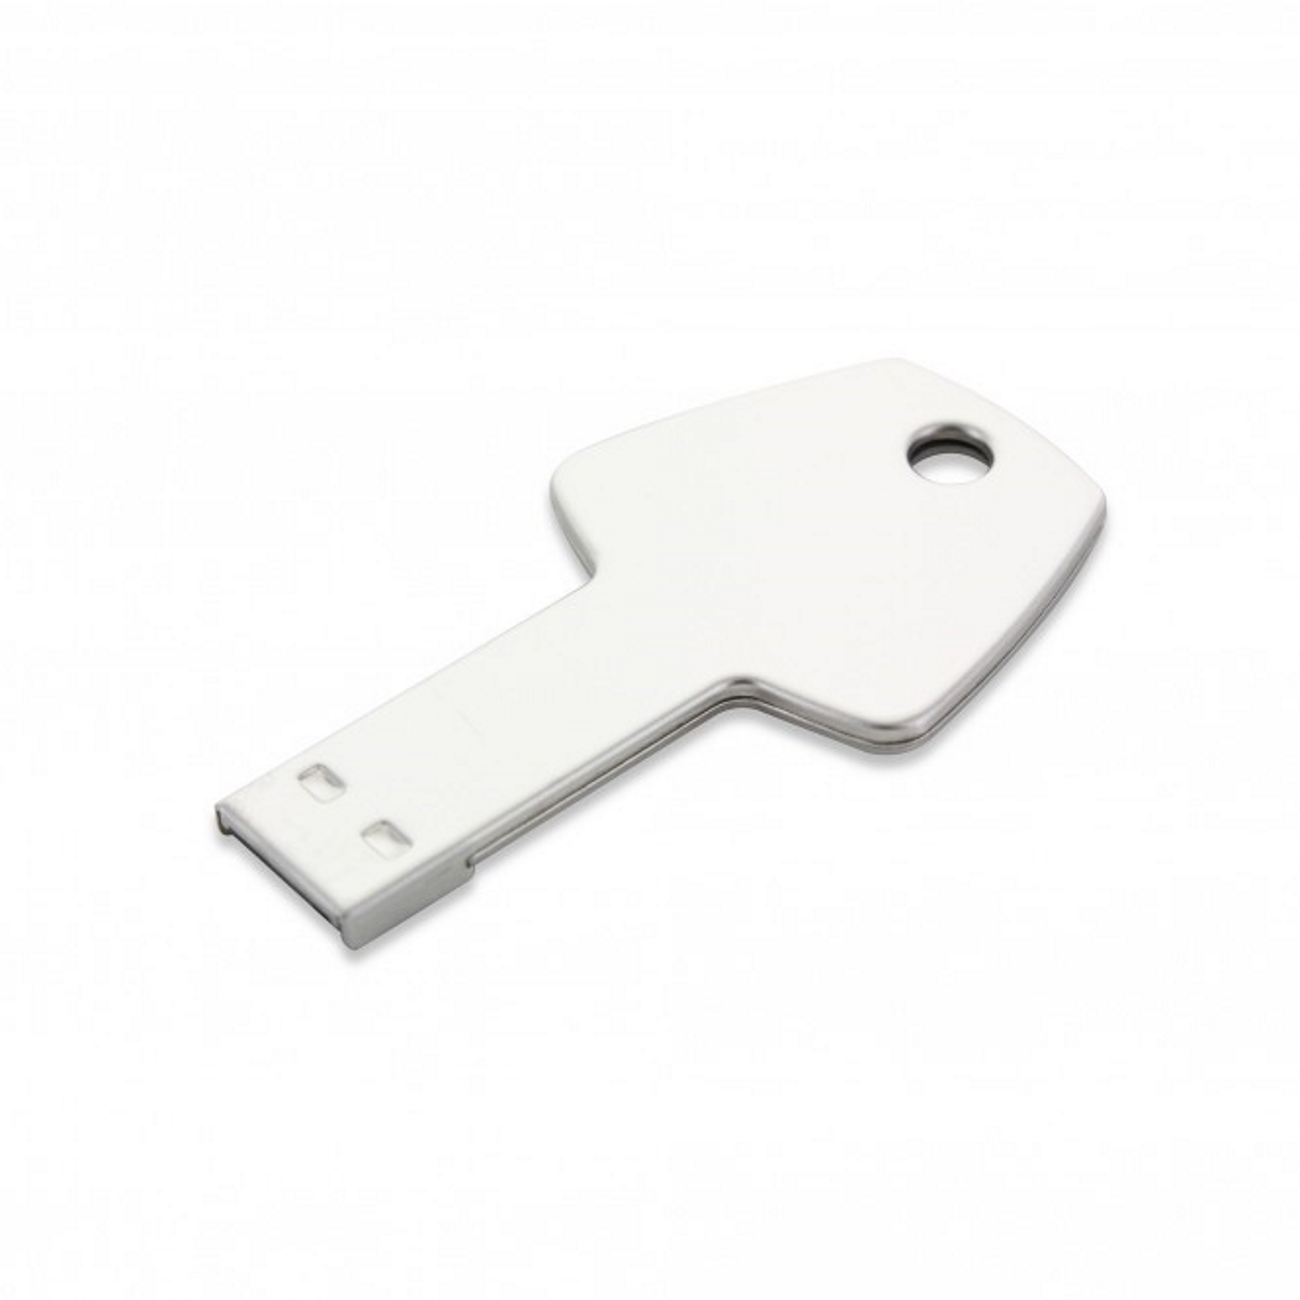 USB GERMANY ®Schlüssel GB) (Silber, 4 USB-Stick Key